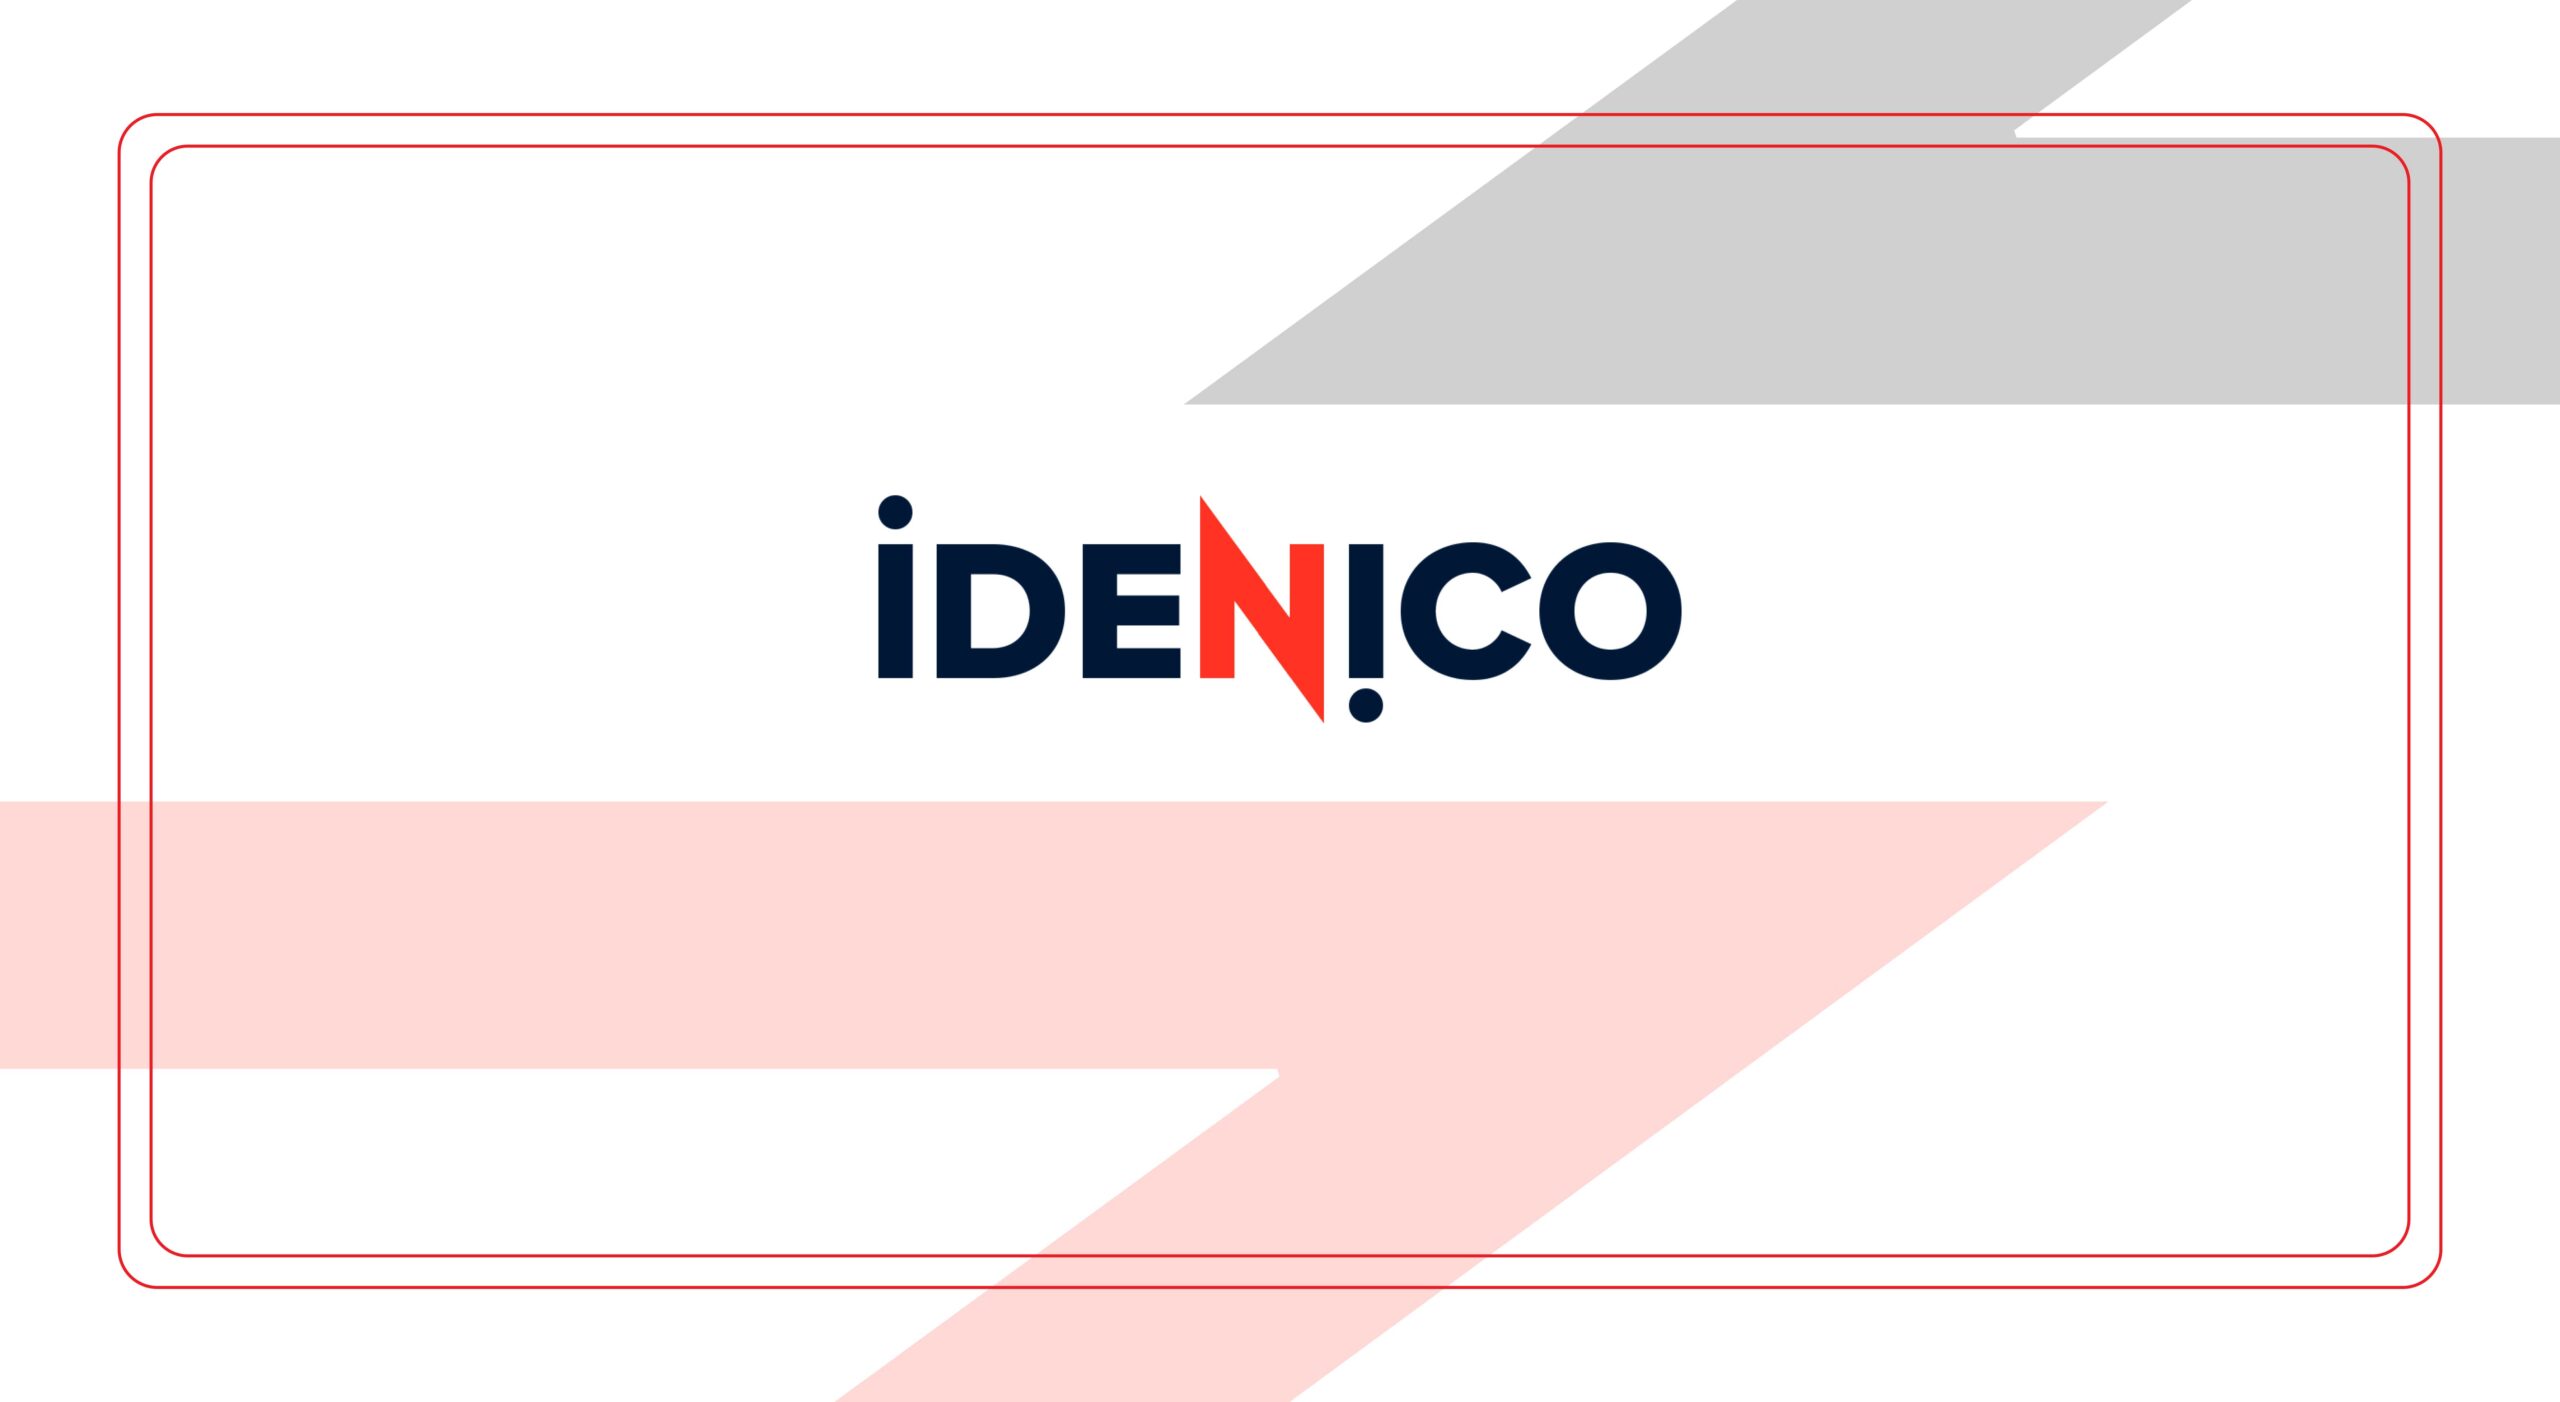 IDENICO branding guide 1 scaled